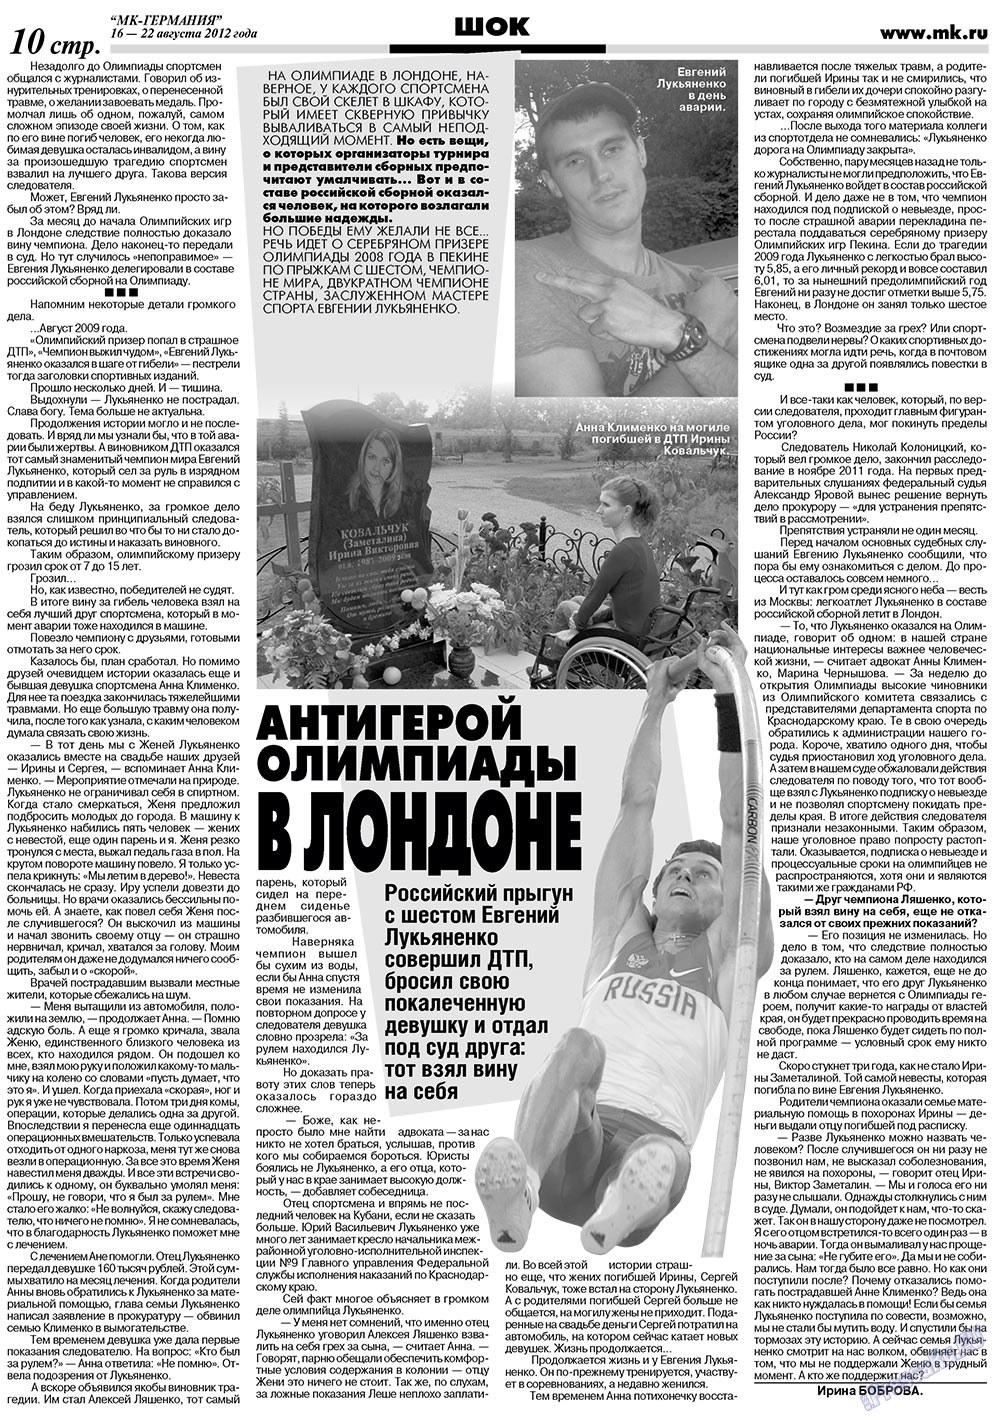 МК-Германия, газета. 2012 №33 стр.10